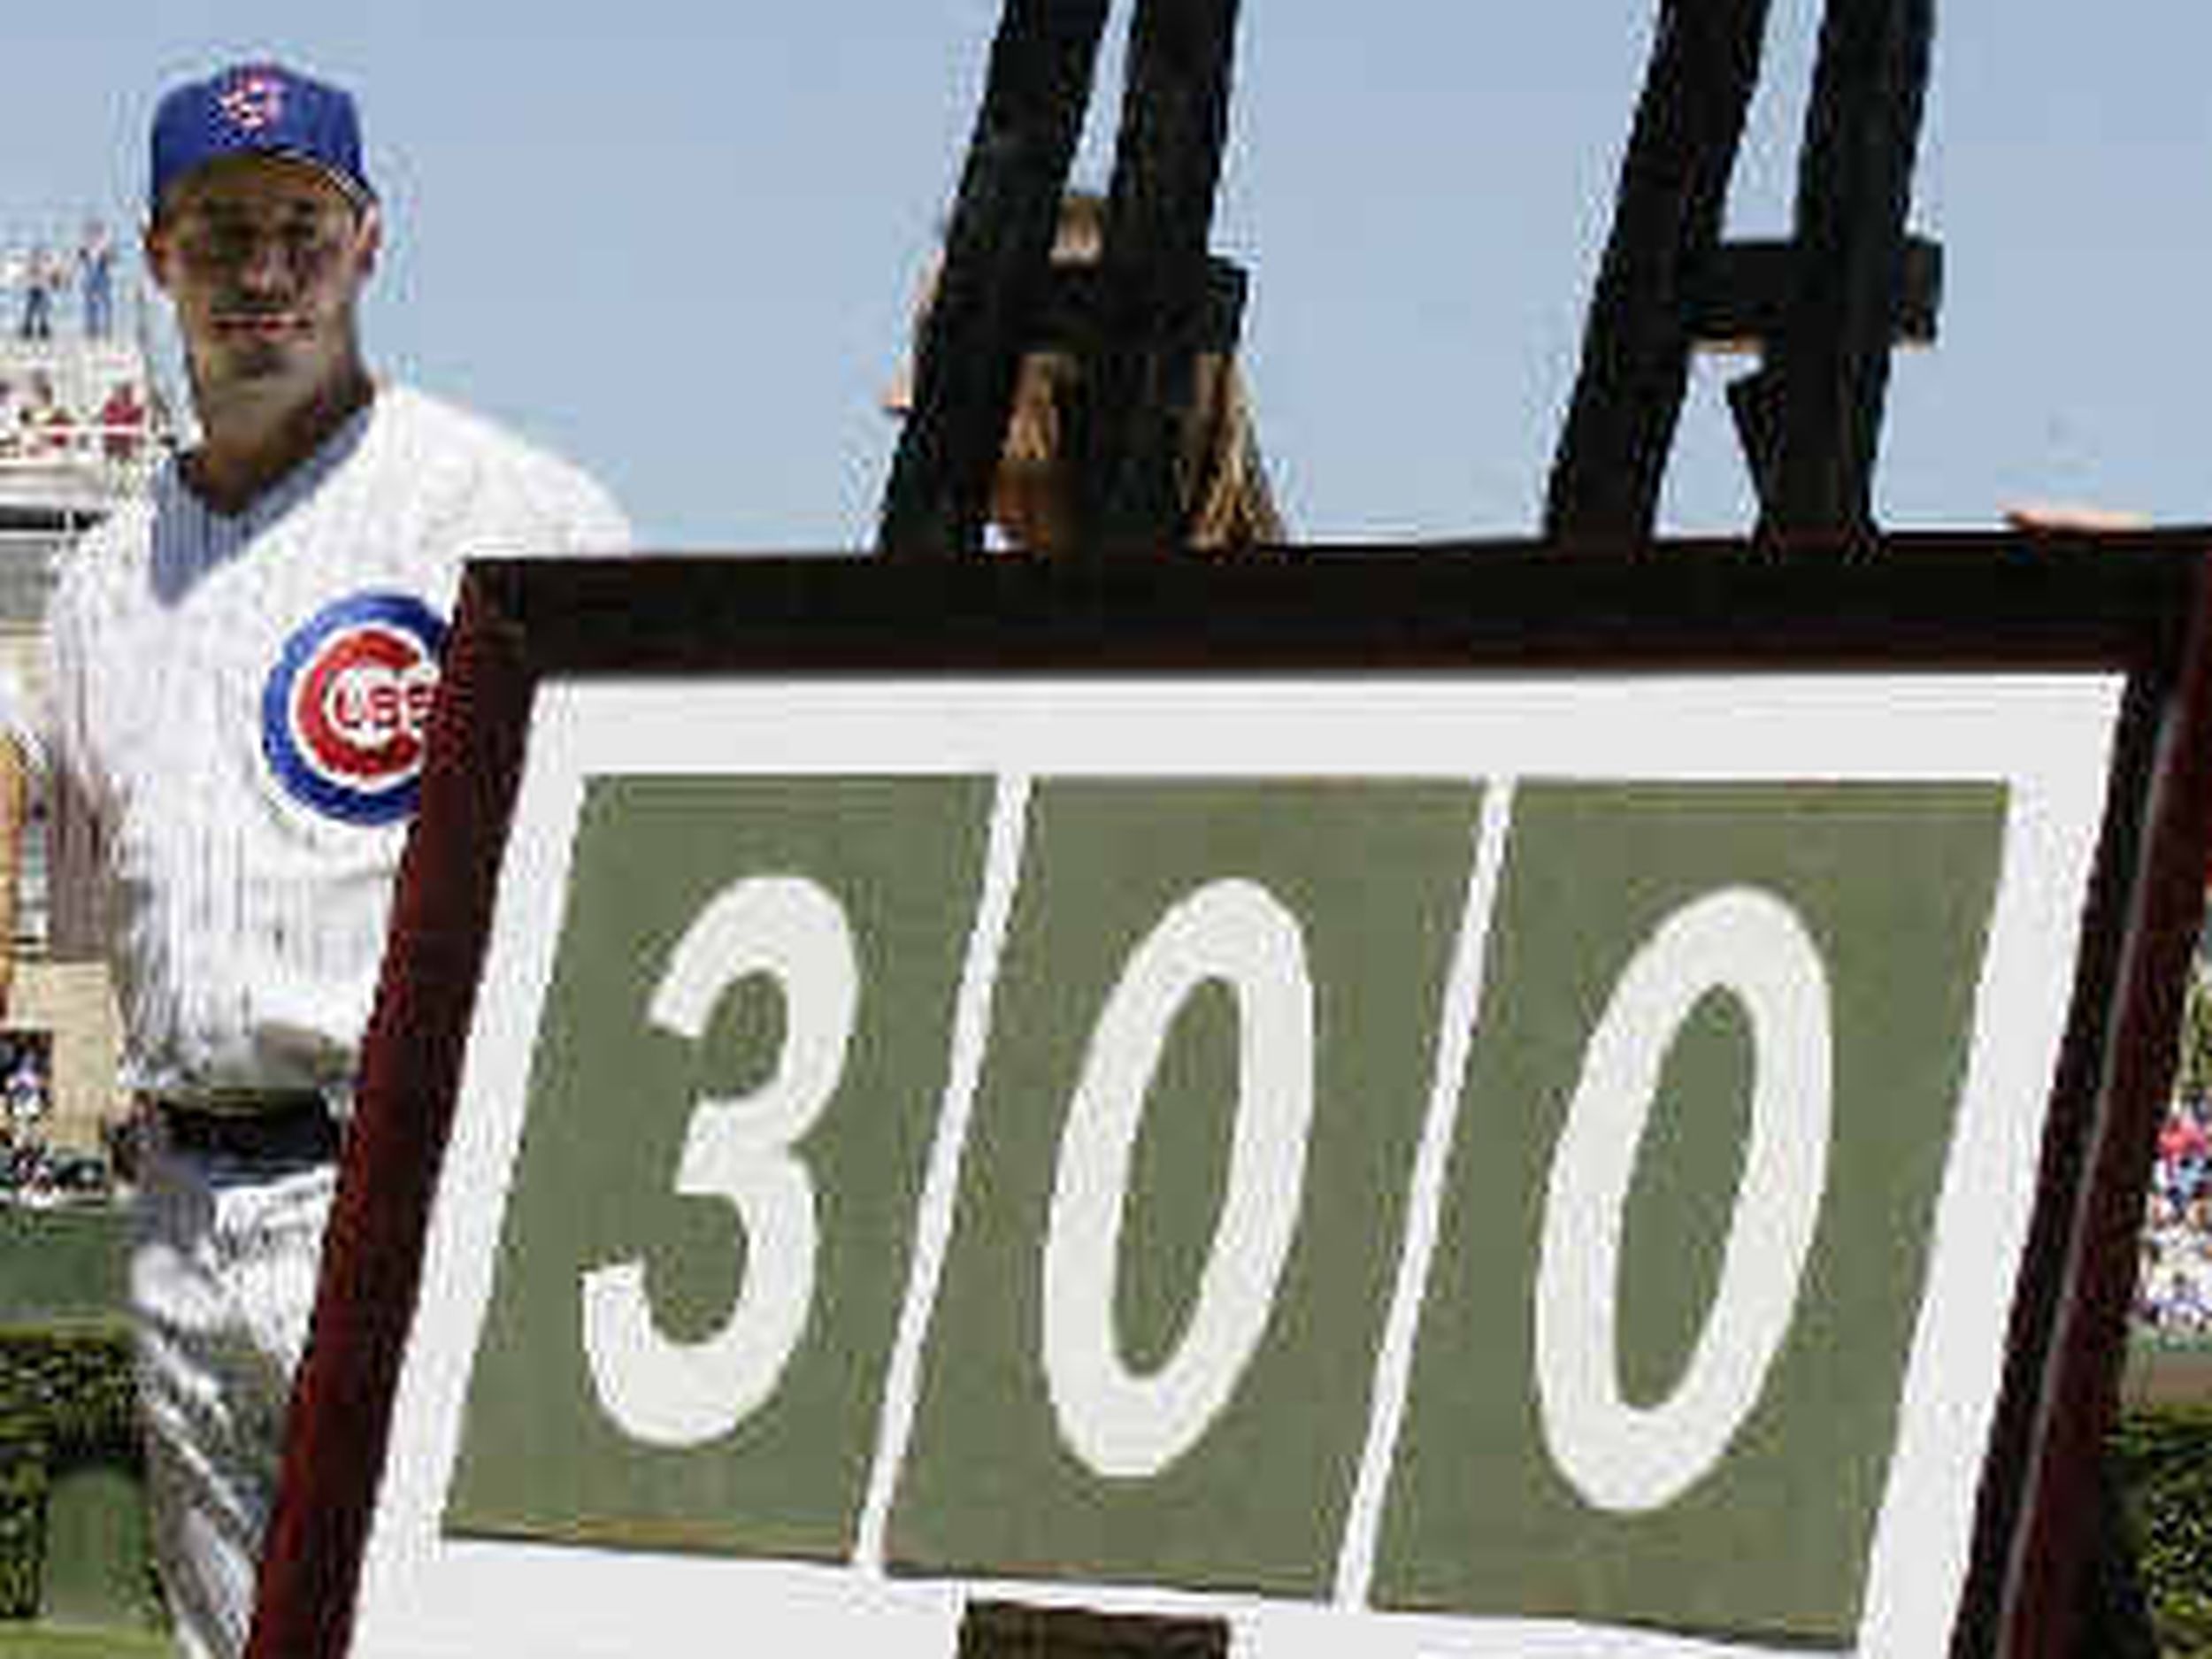 2004 Greg Maddux Game Worn Chicago Cubs Jersey. Baseball